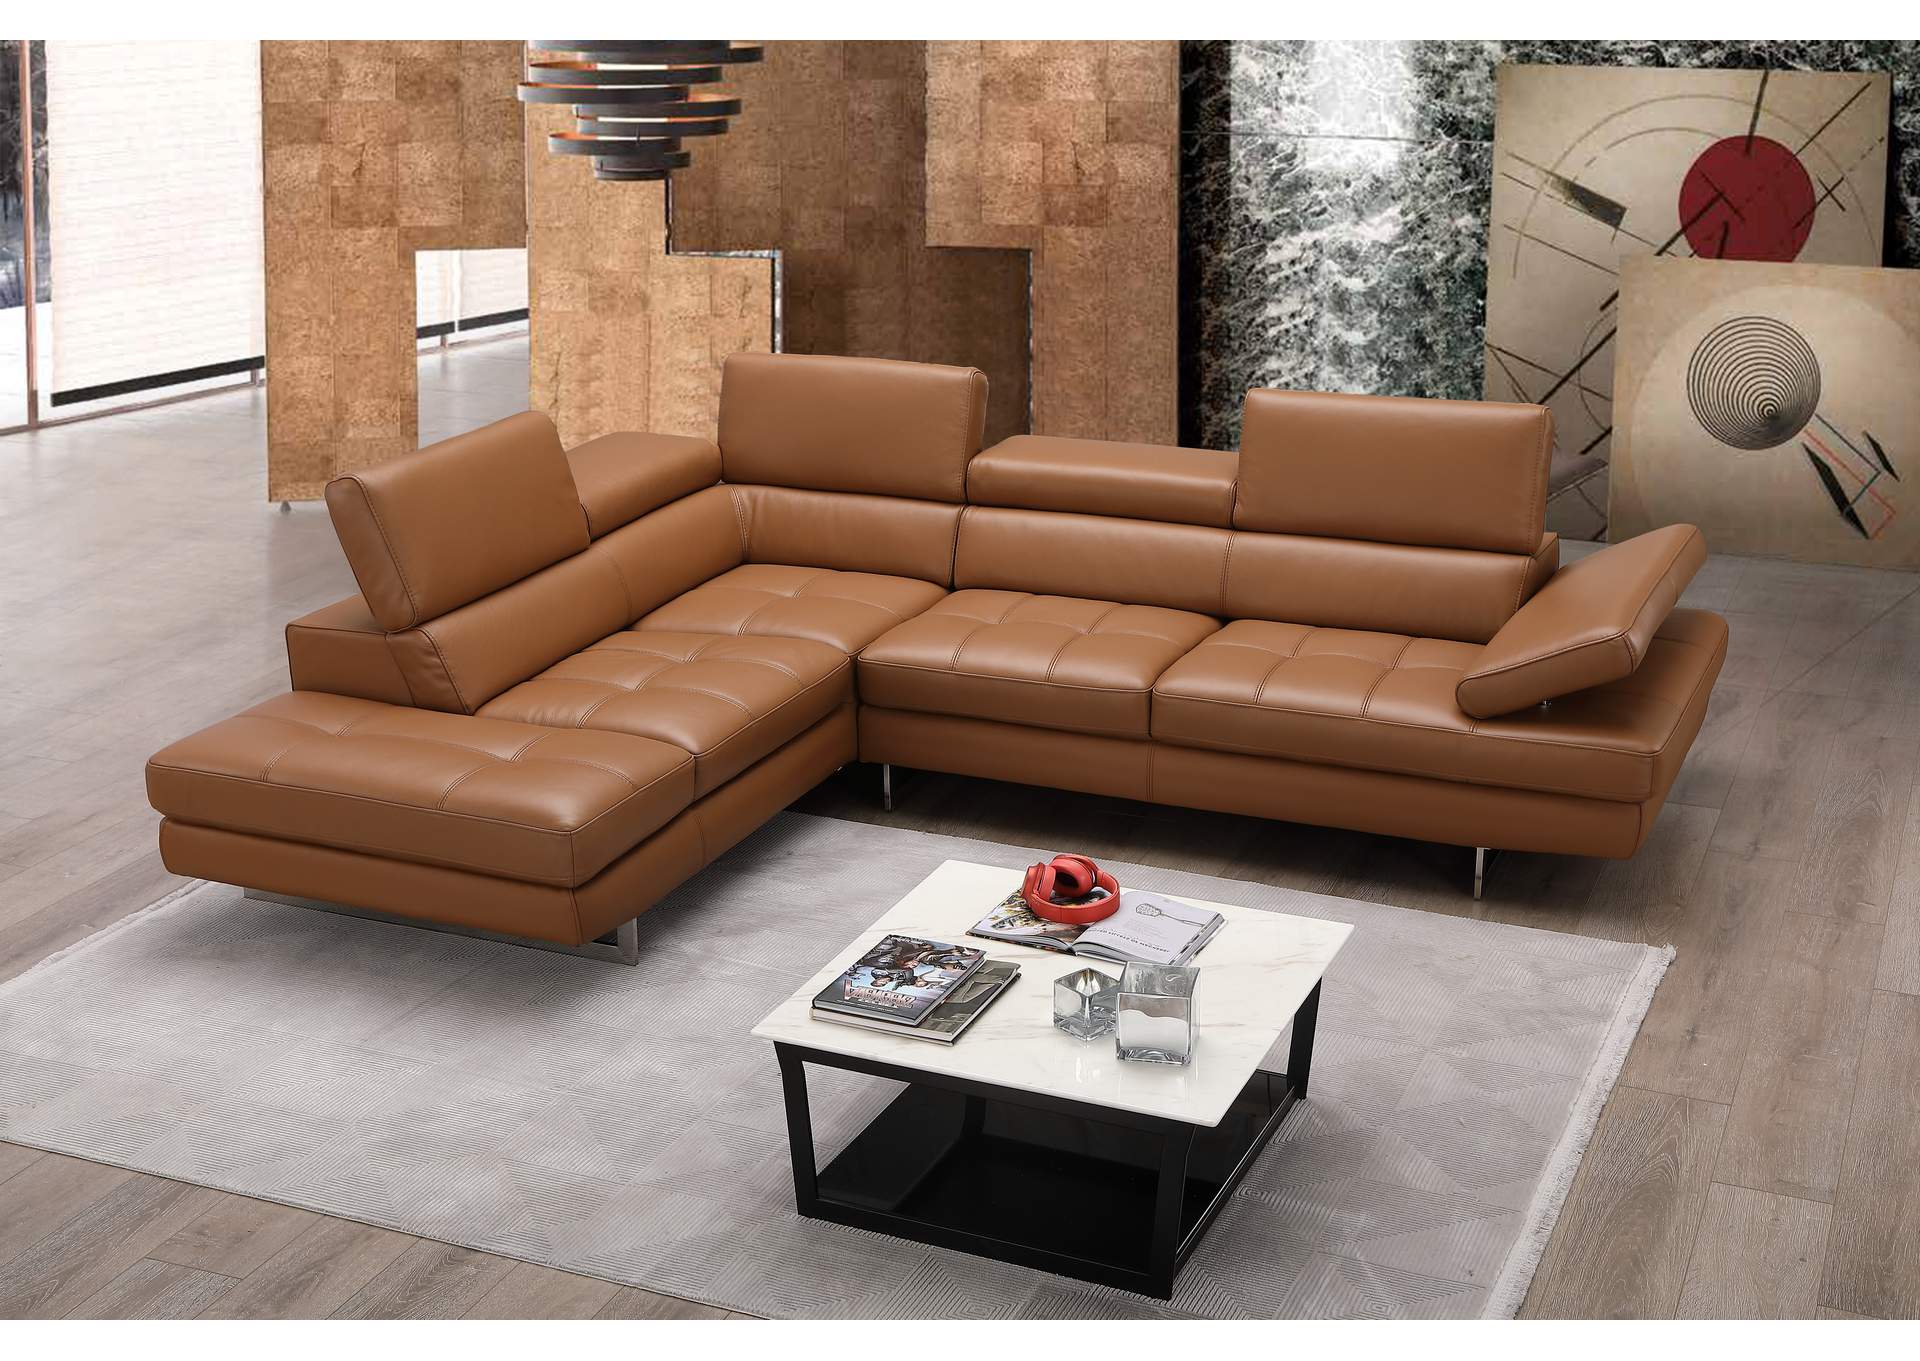 A761 Italian Leather Sectional Caramel, Italian Leather Sectional